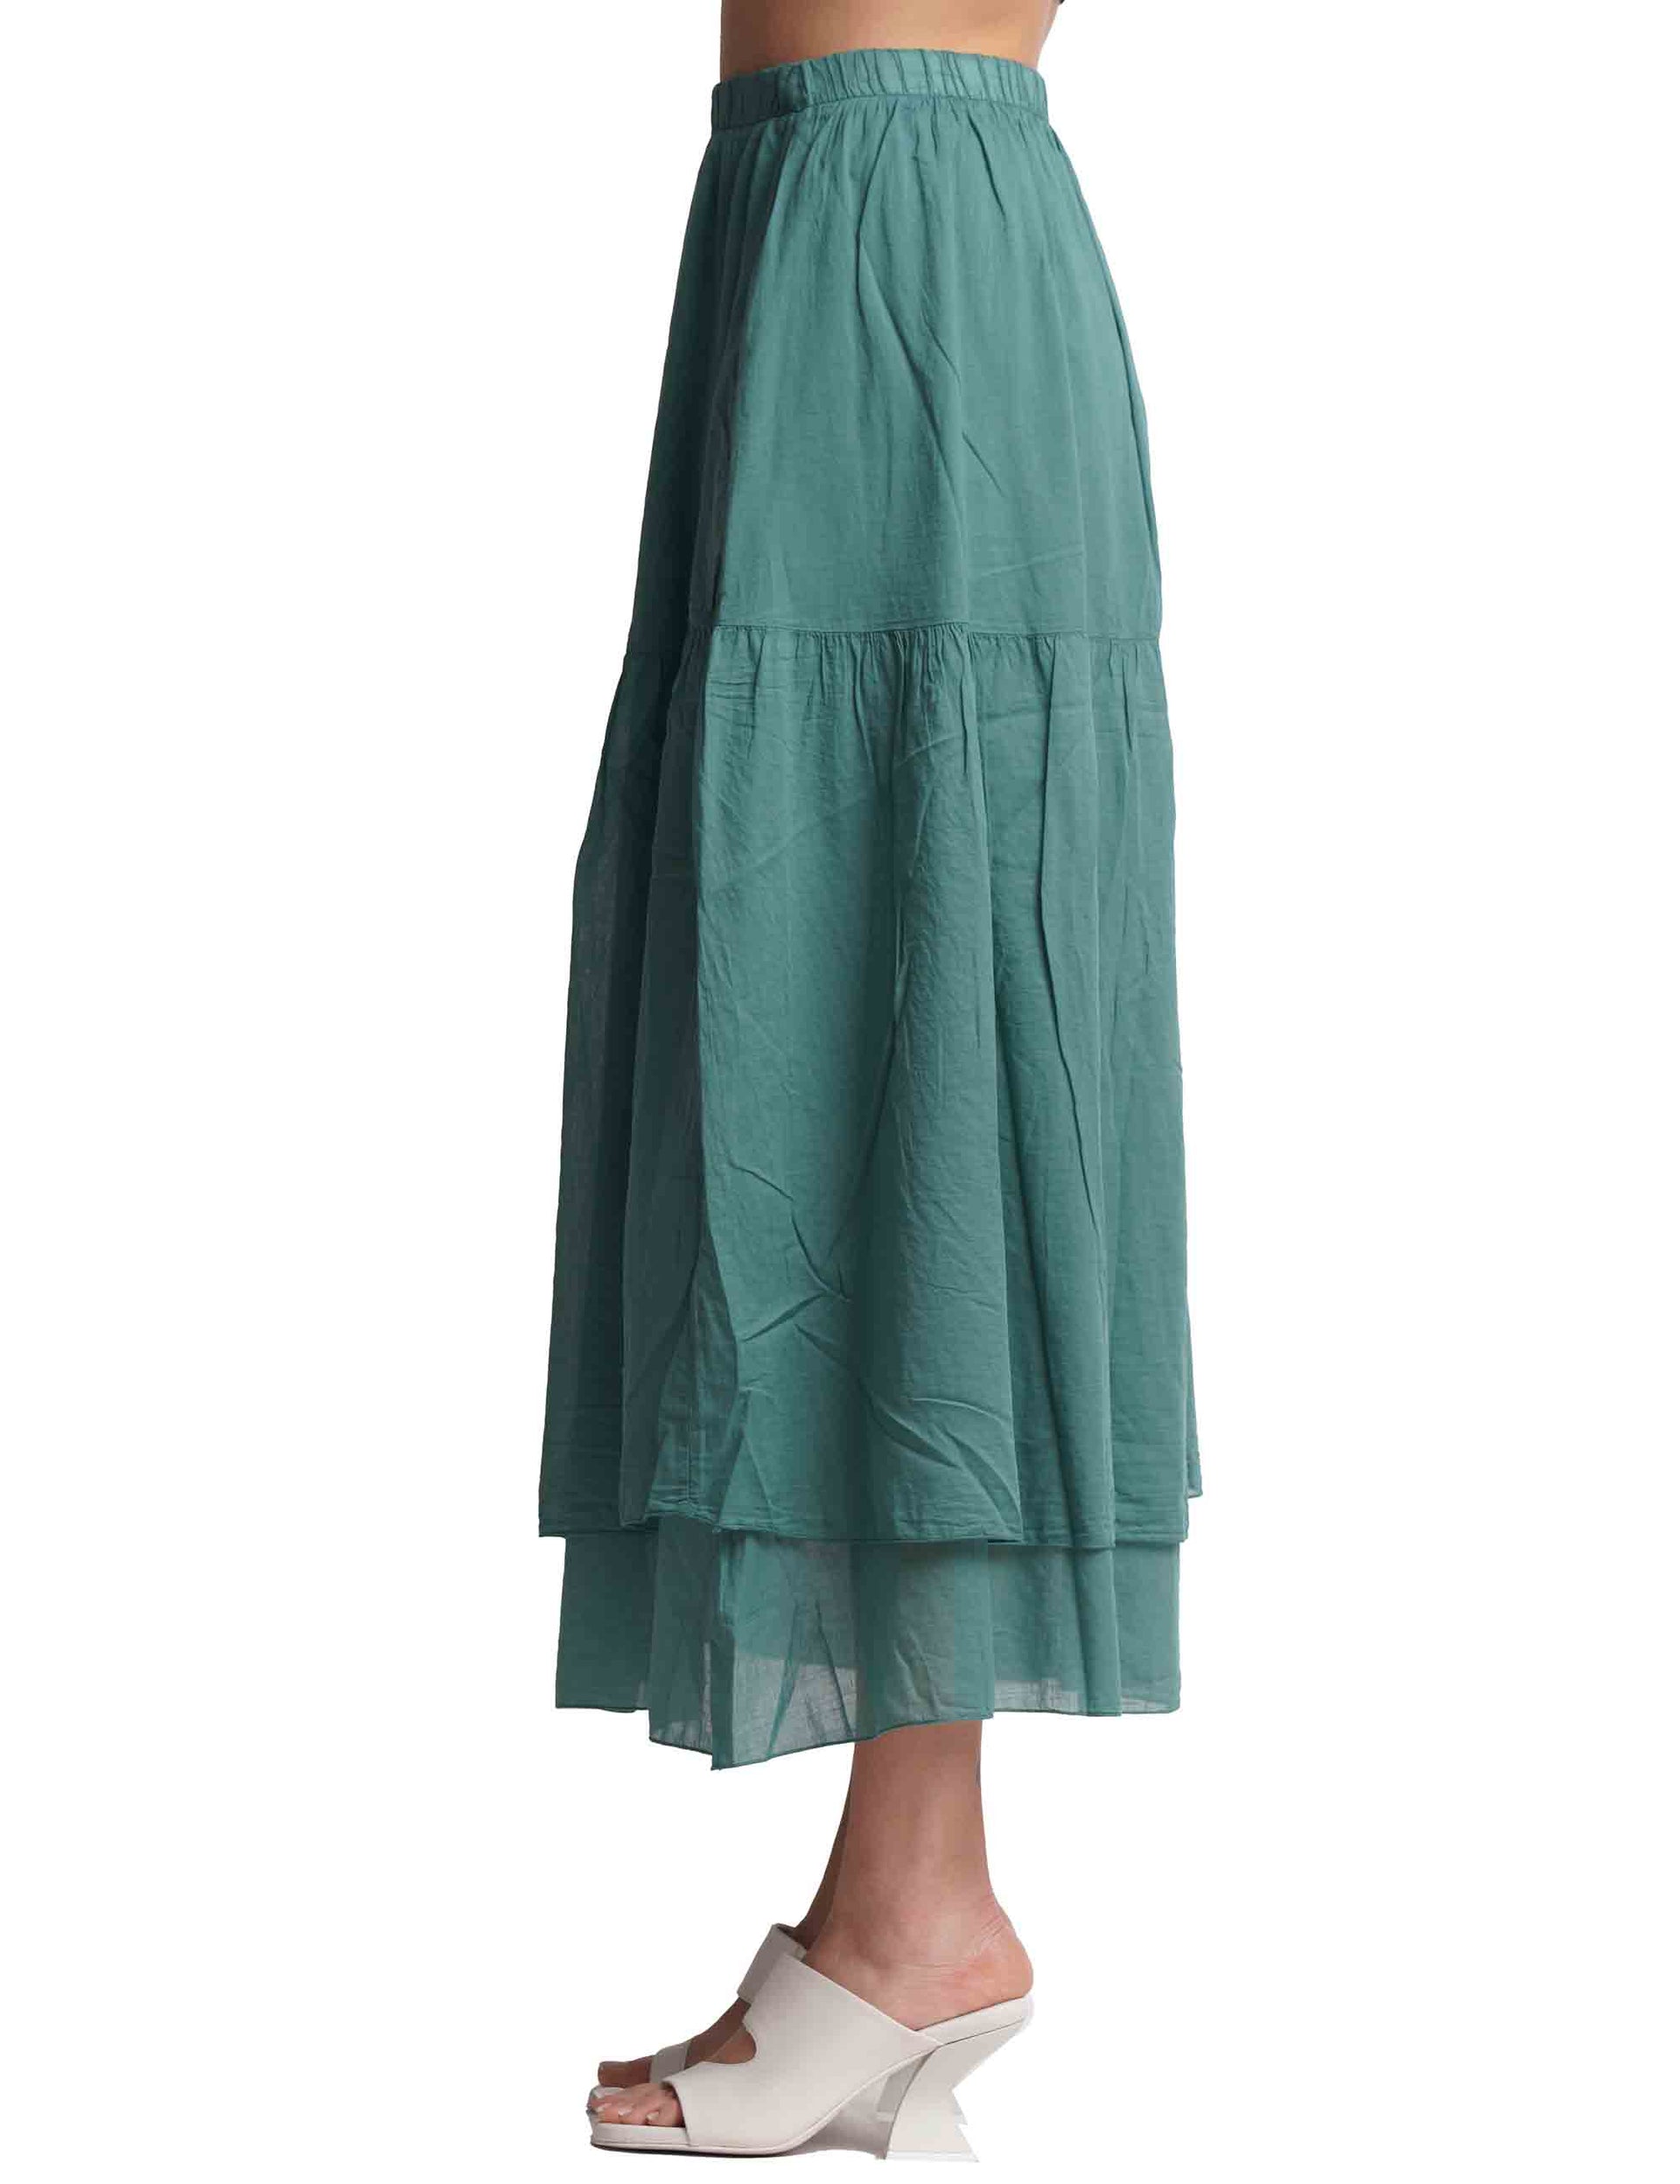 Long women's skirts in green cotton